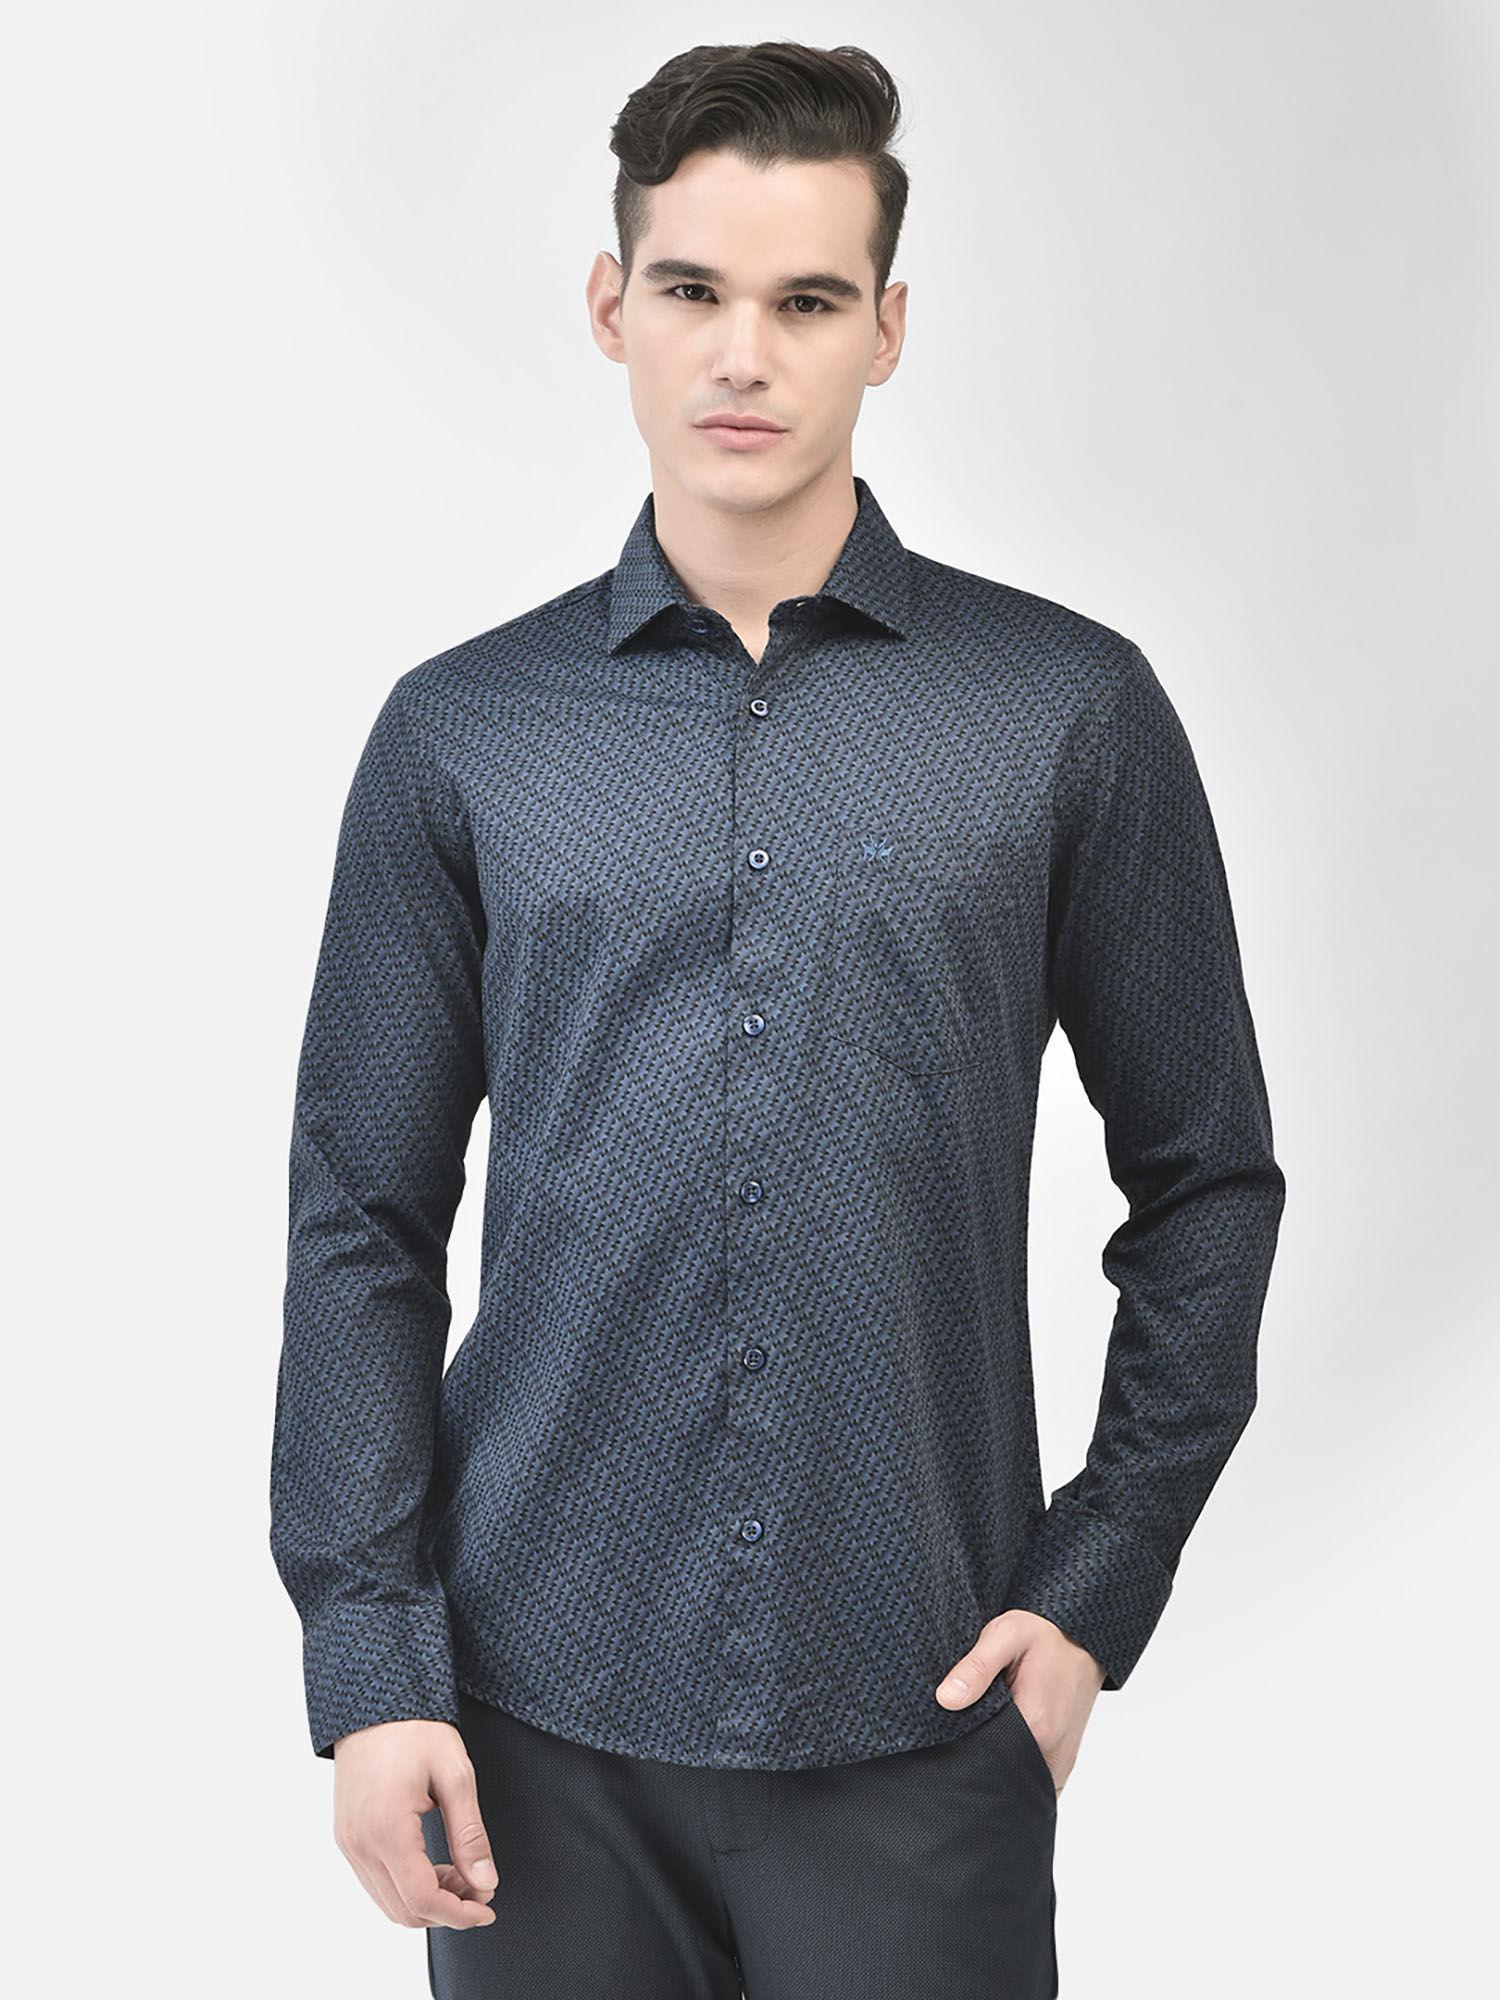 men's-navy-blue-printed-shirt